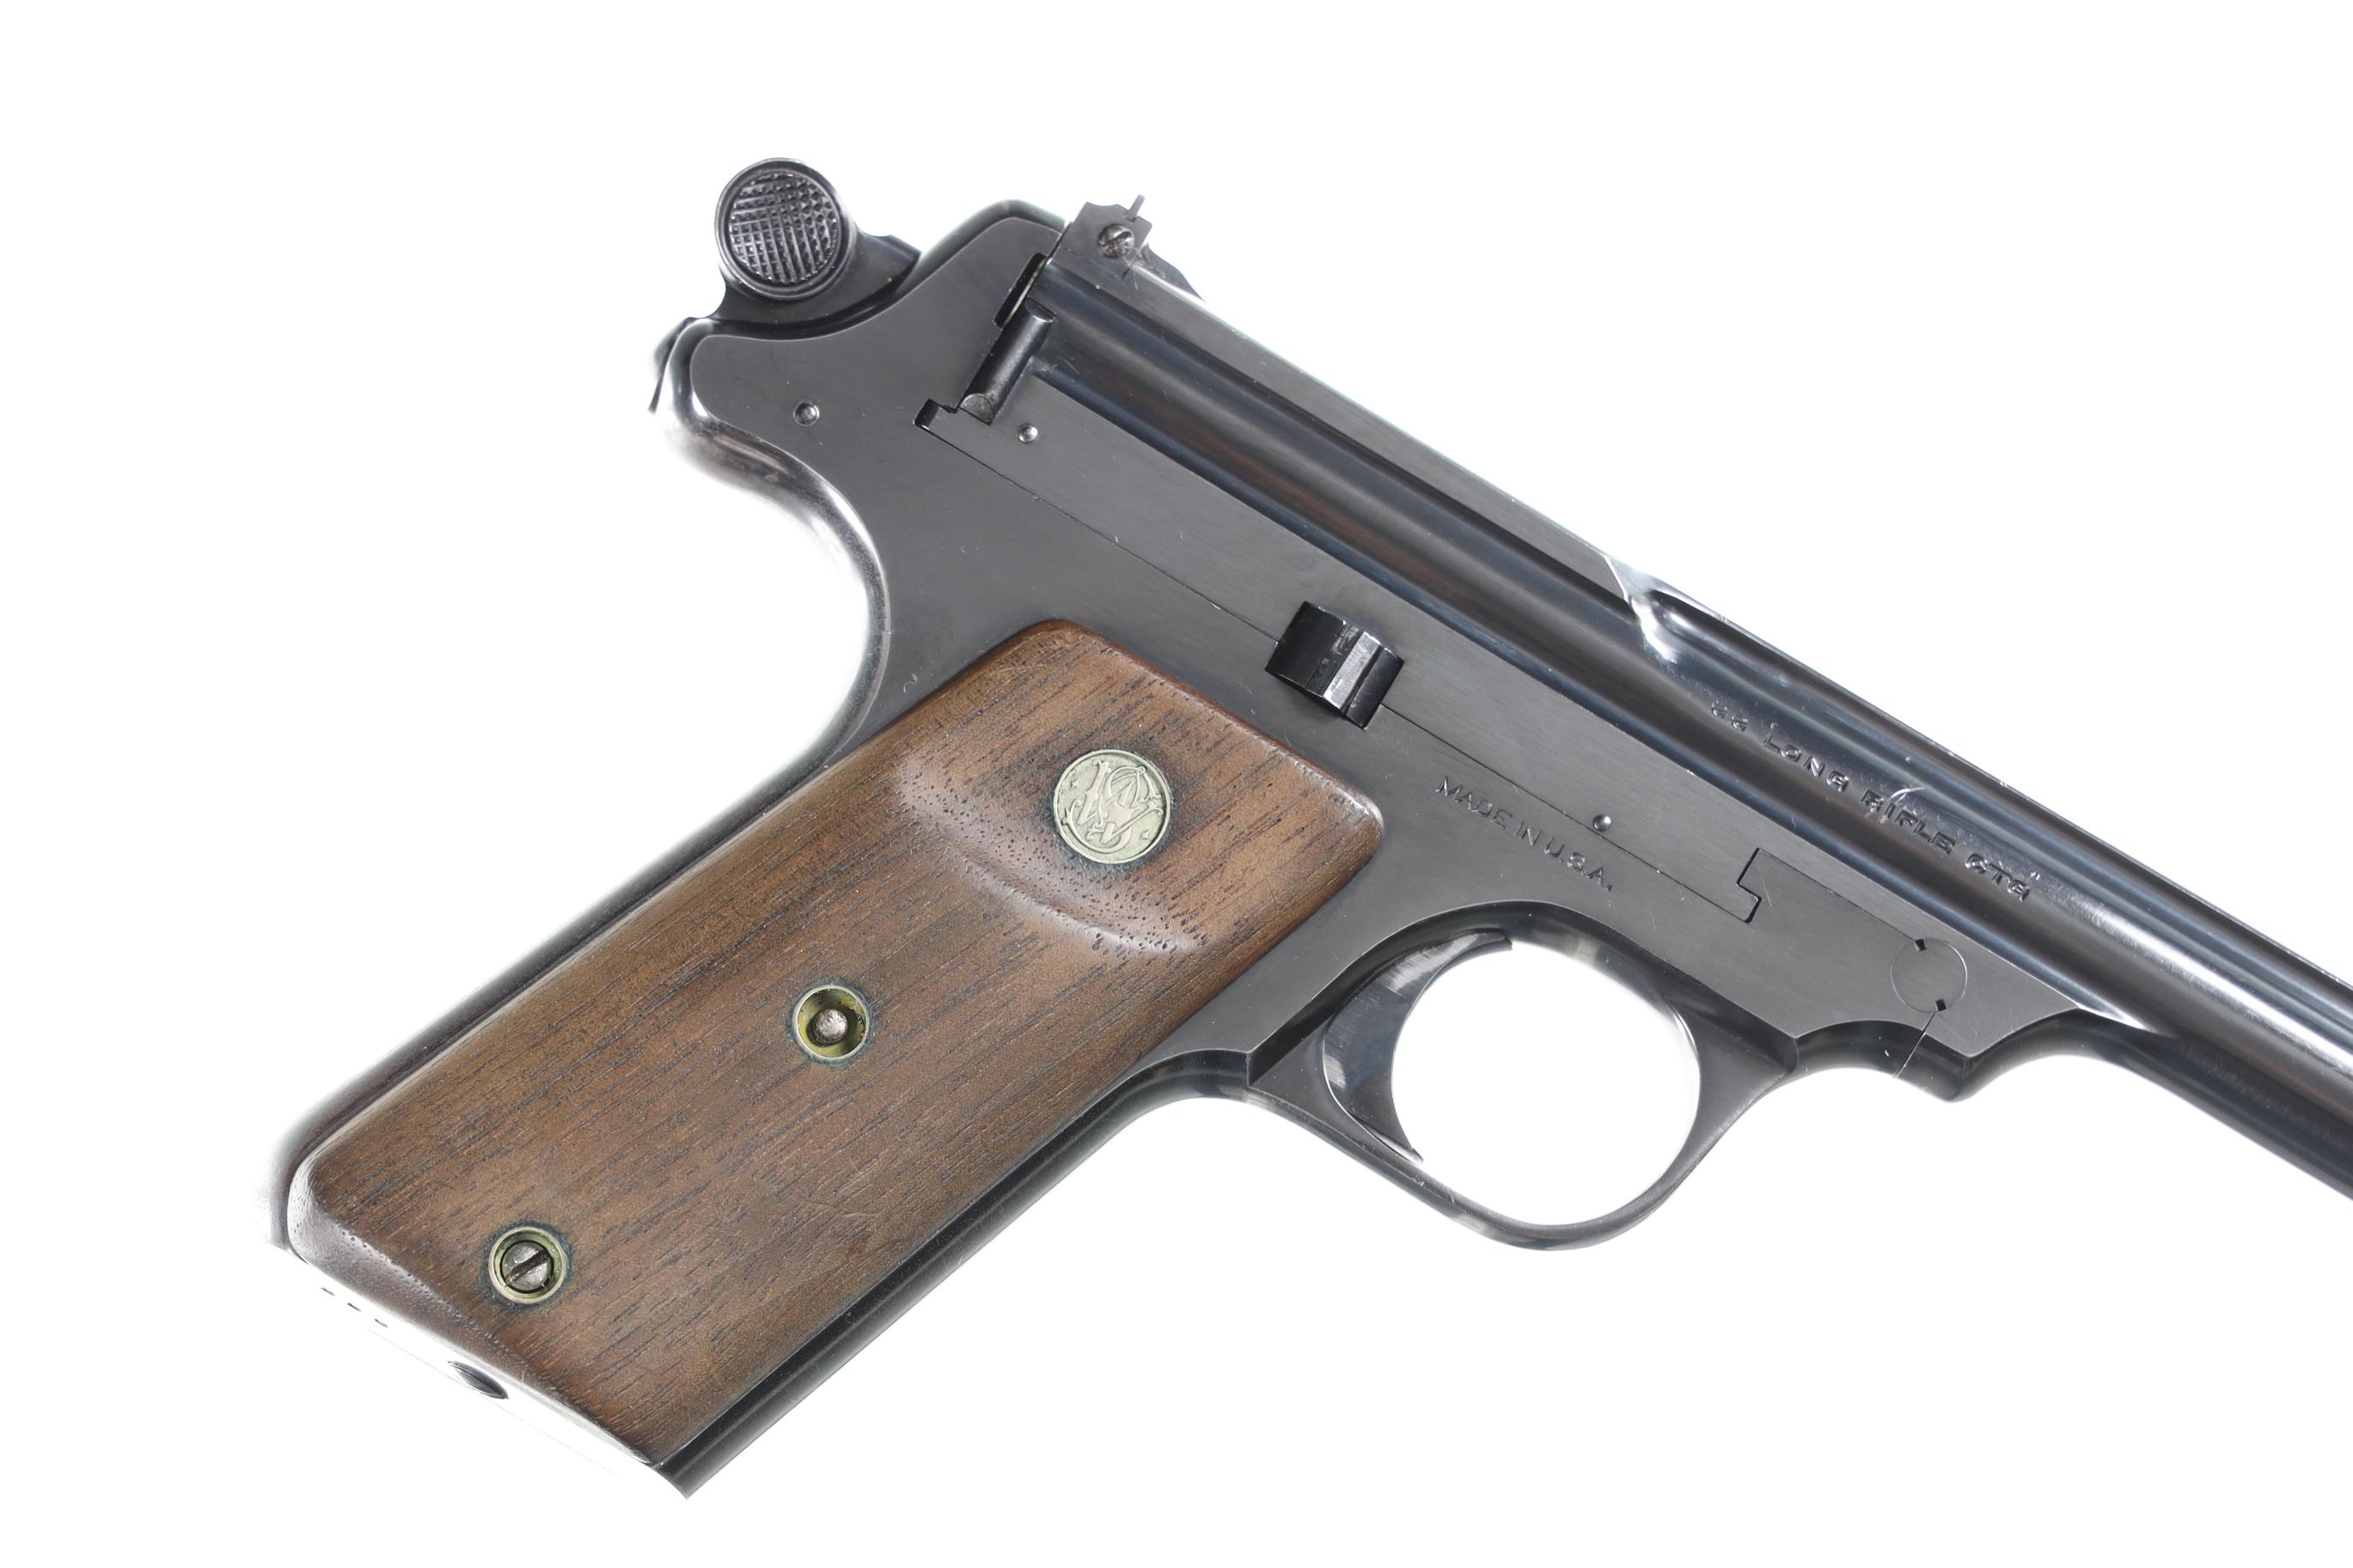 Smith & Wesson Straight Line Pistol .22 lr